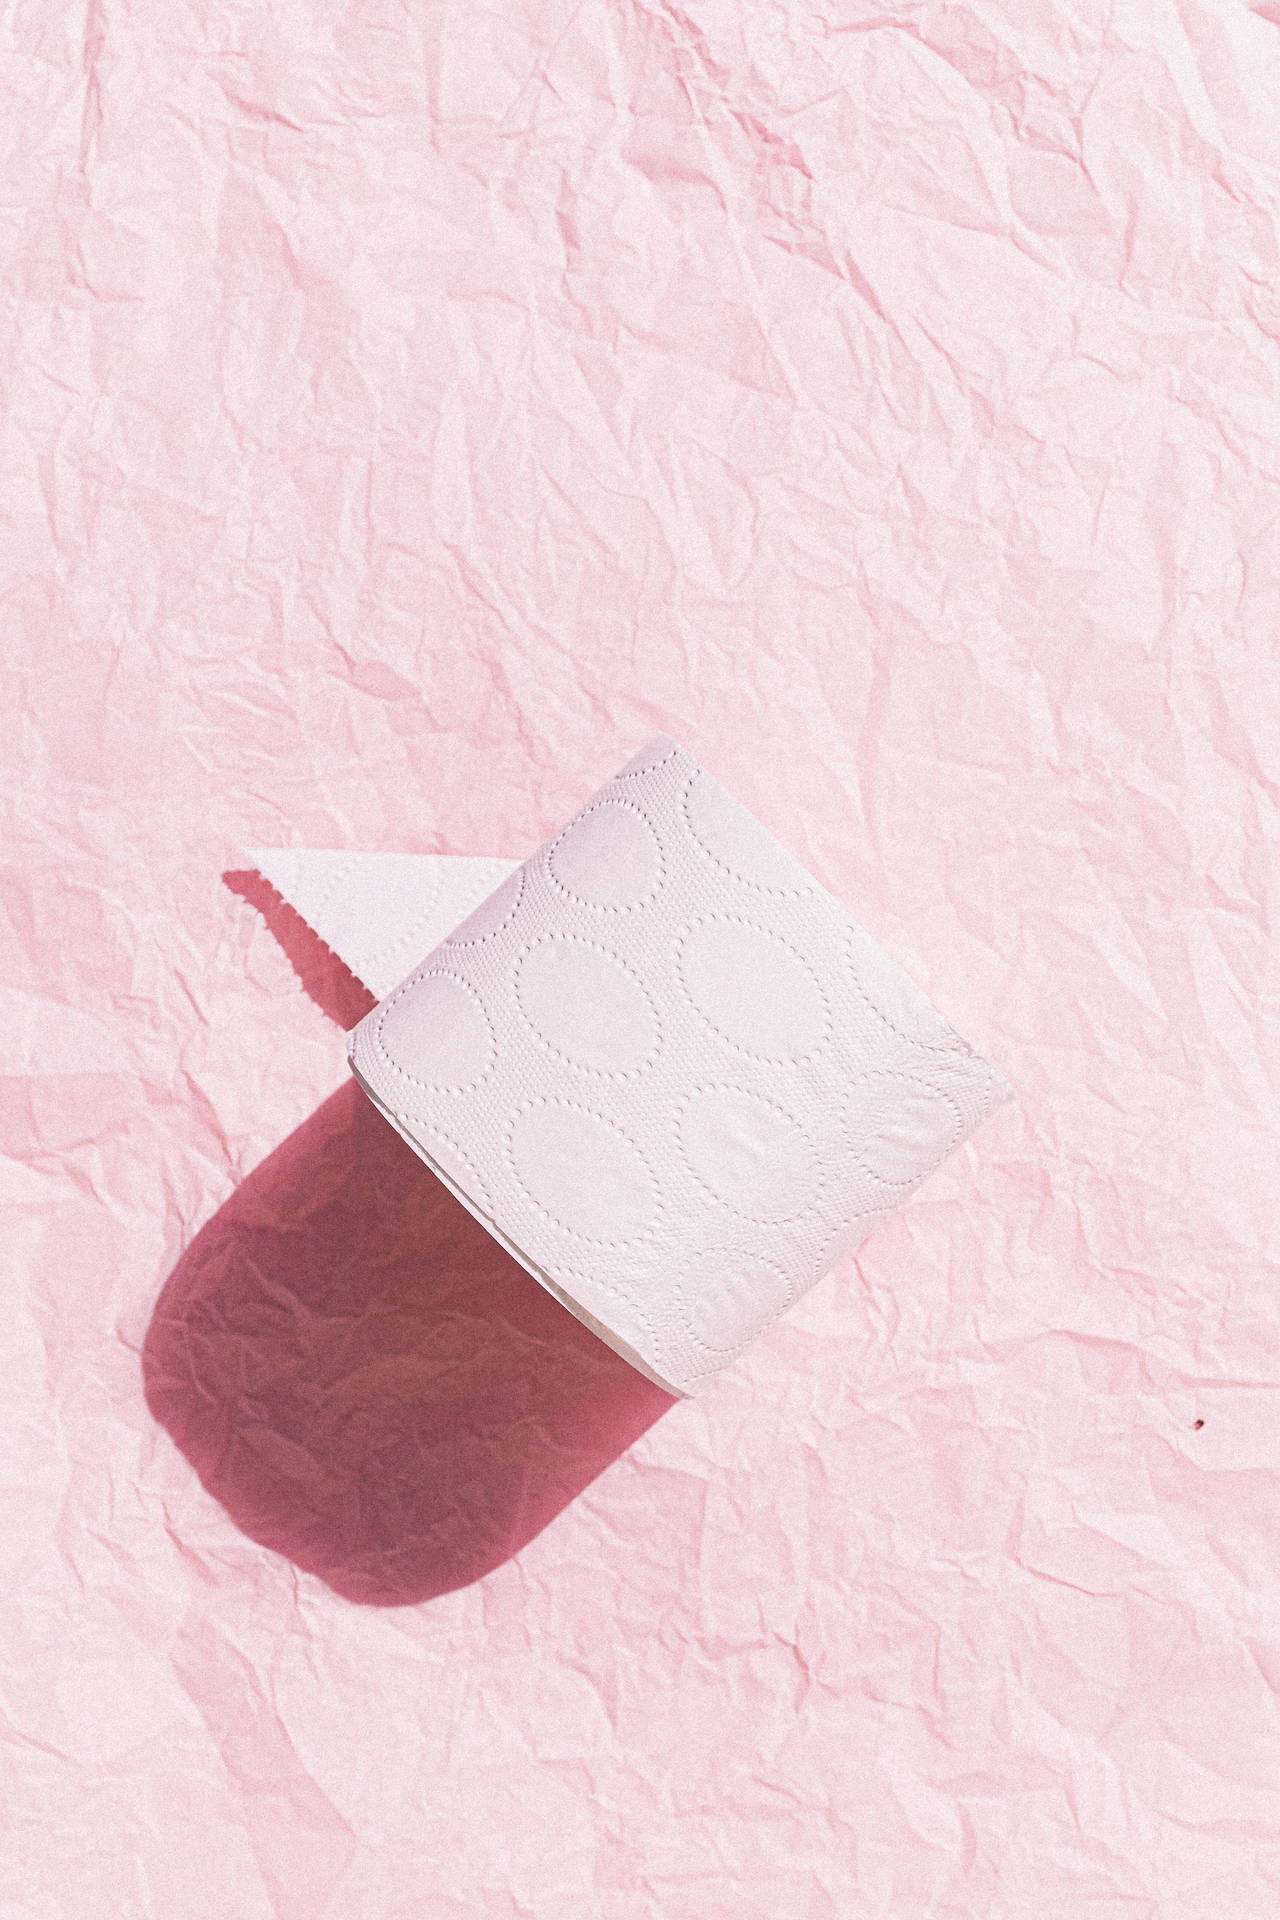 Tissue On Pink Background Wallpaper